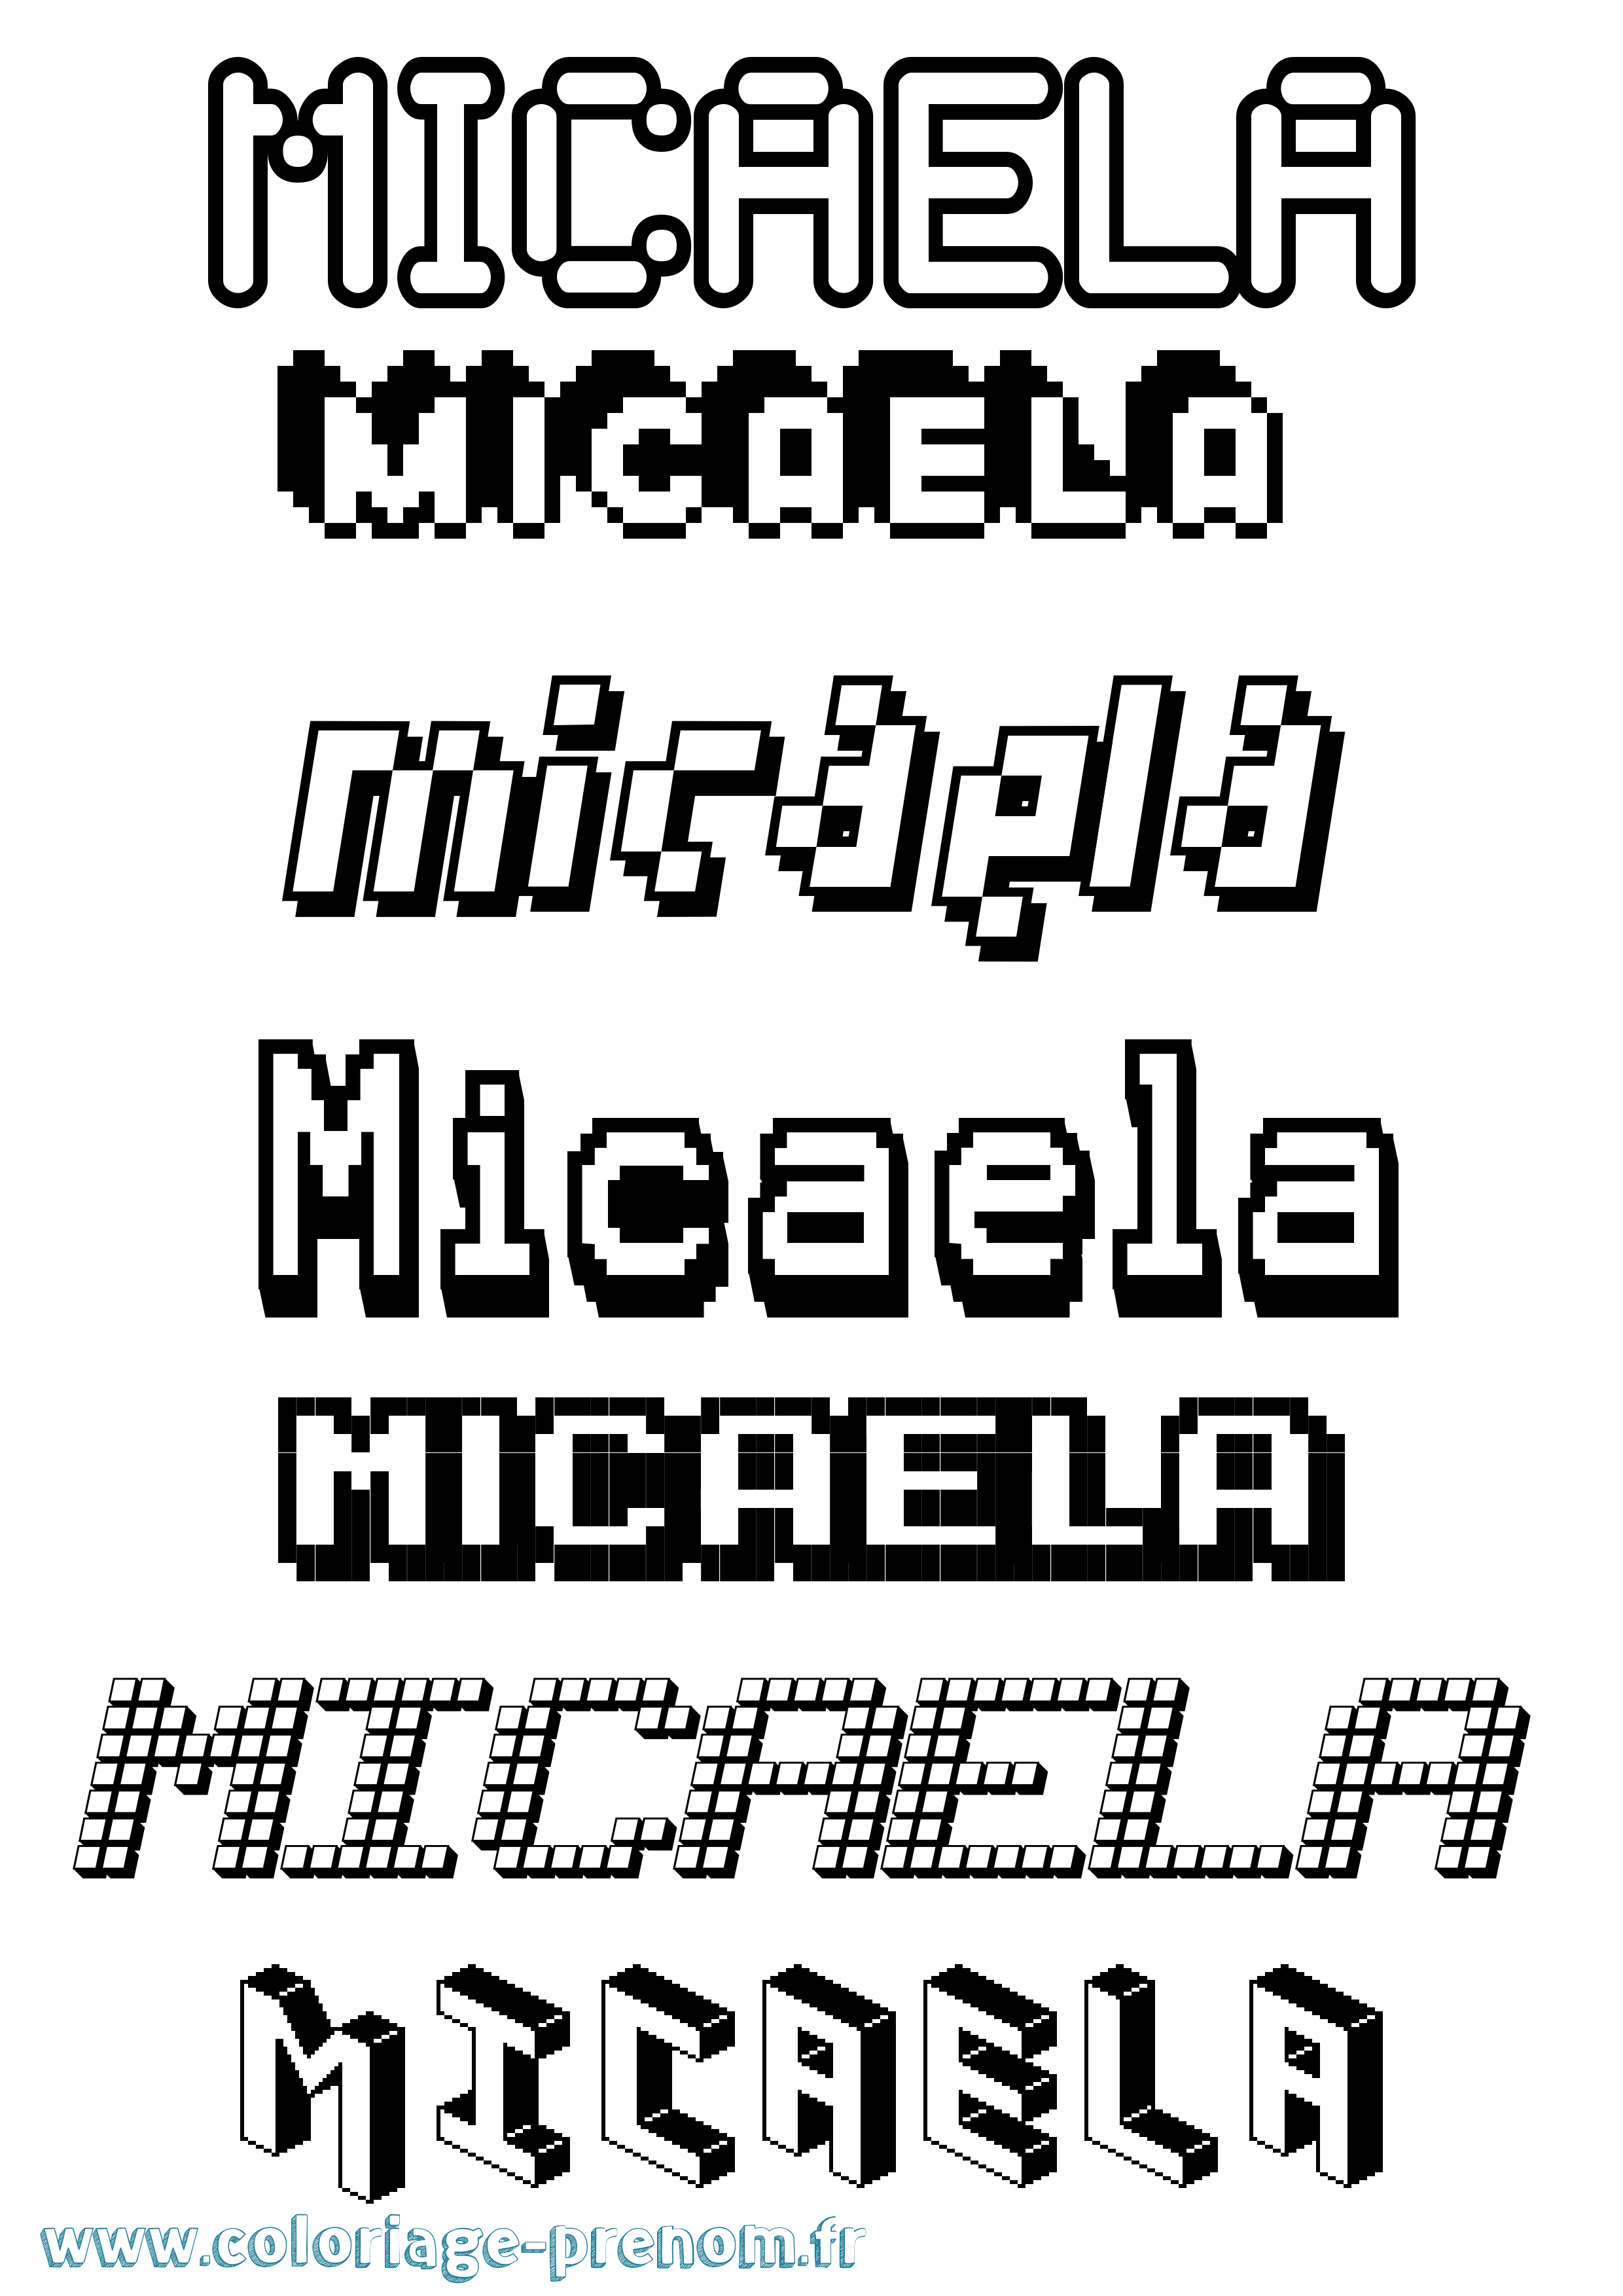 Coloriage prénom Micaela Pixel